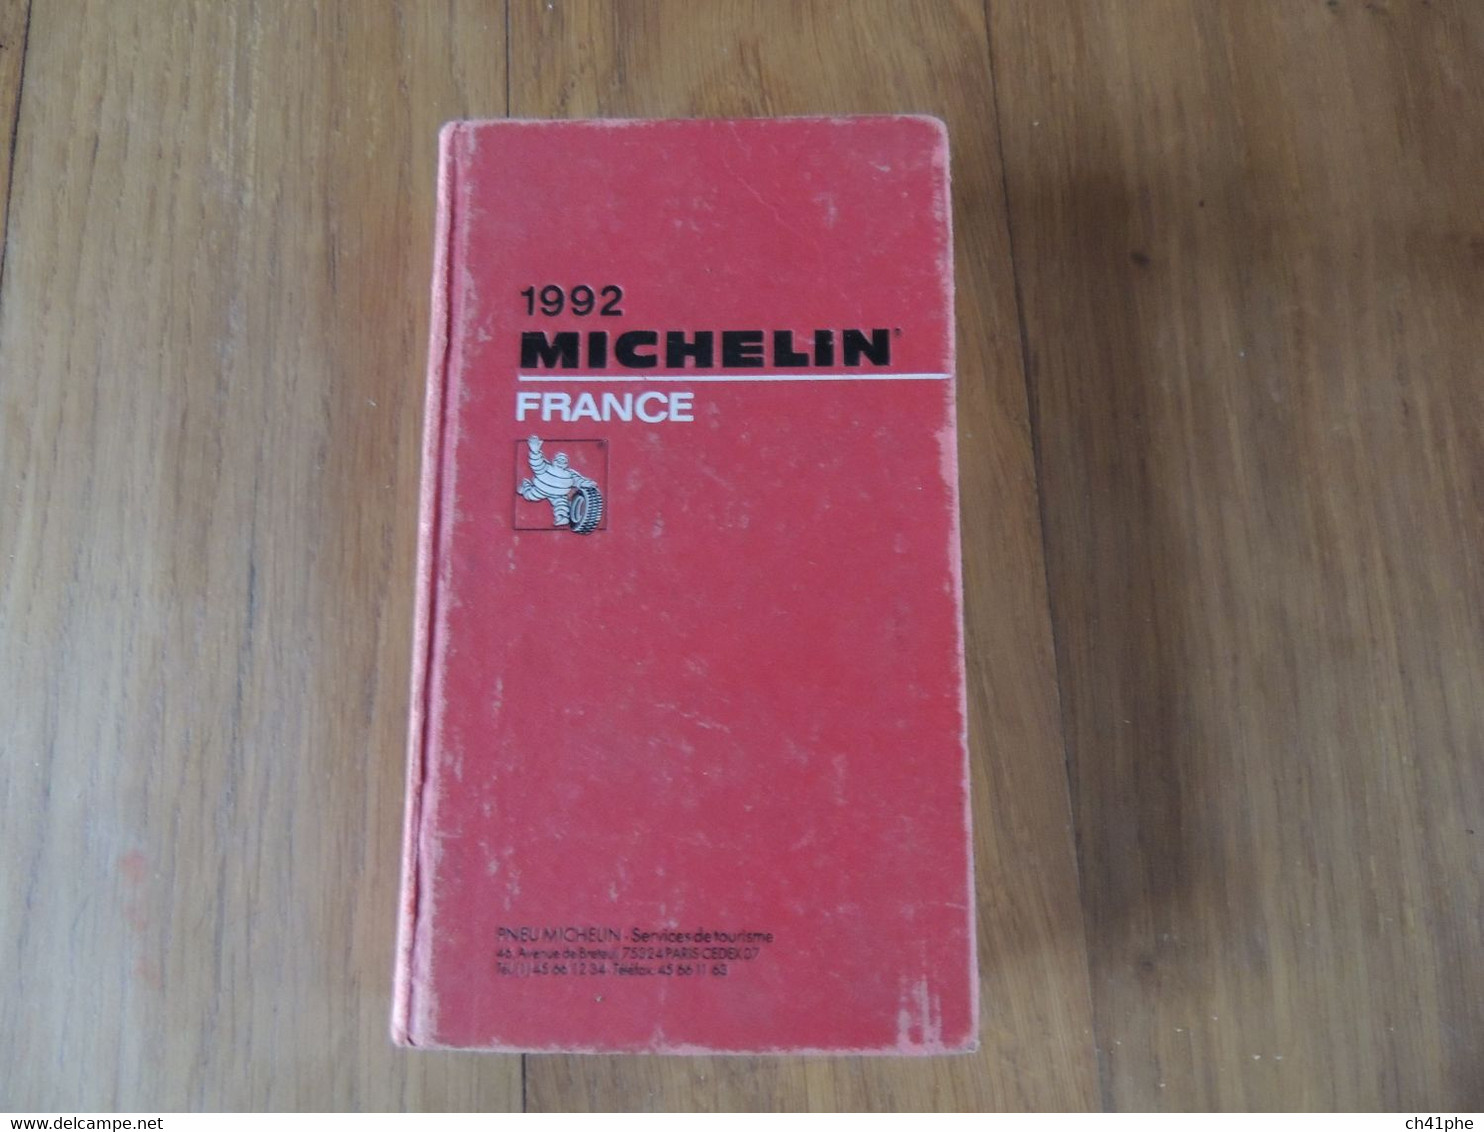 3 GUIDES MICHELIN DE 1977 - 1992 - 1998 - GUIDE MICHELIN - VOIR DETAIL - Michelin-Führer